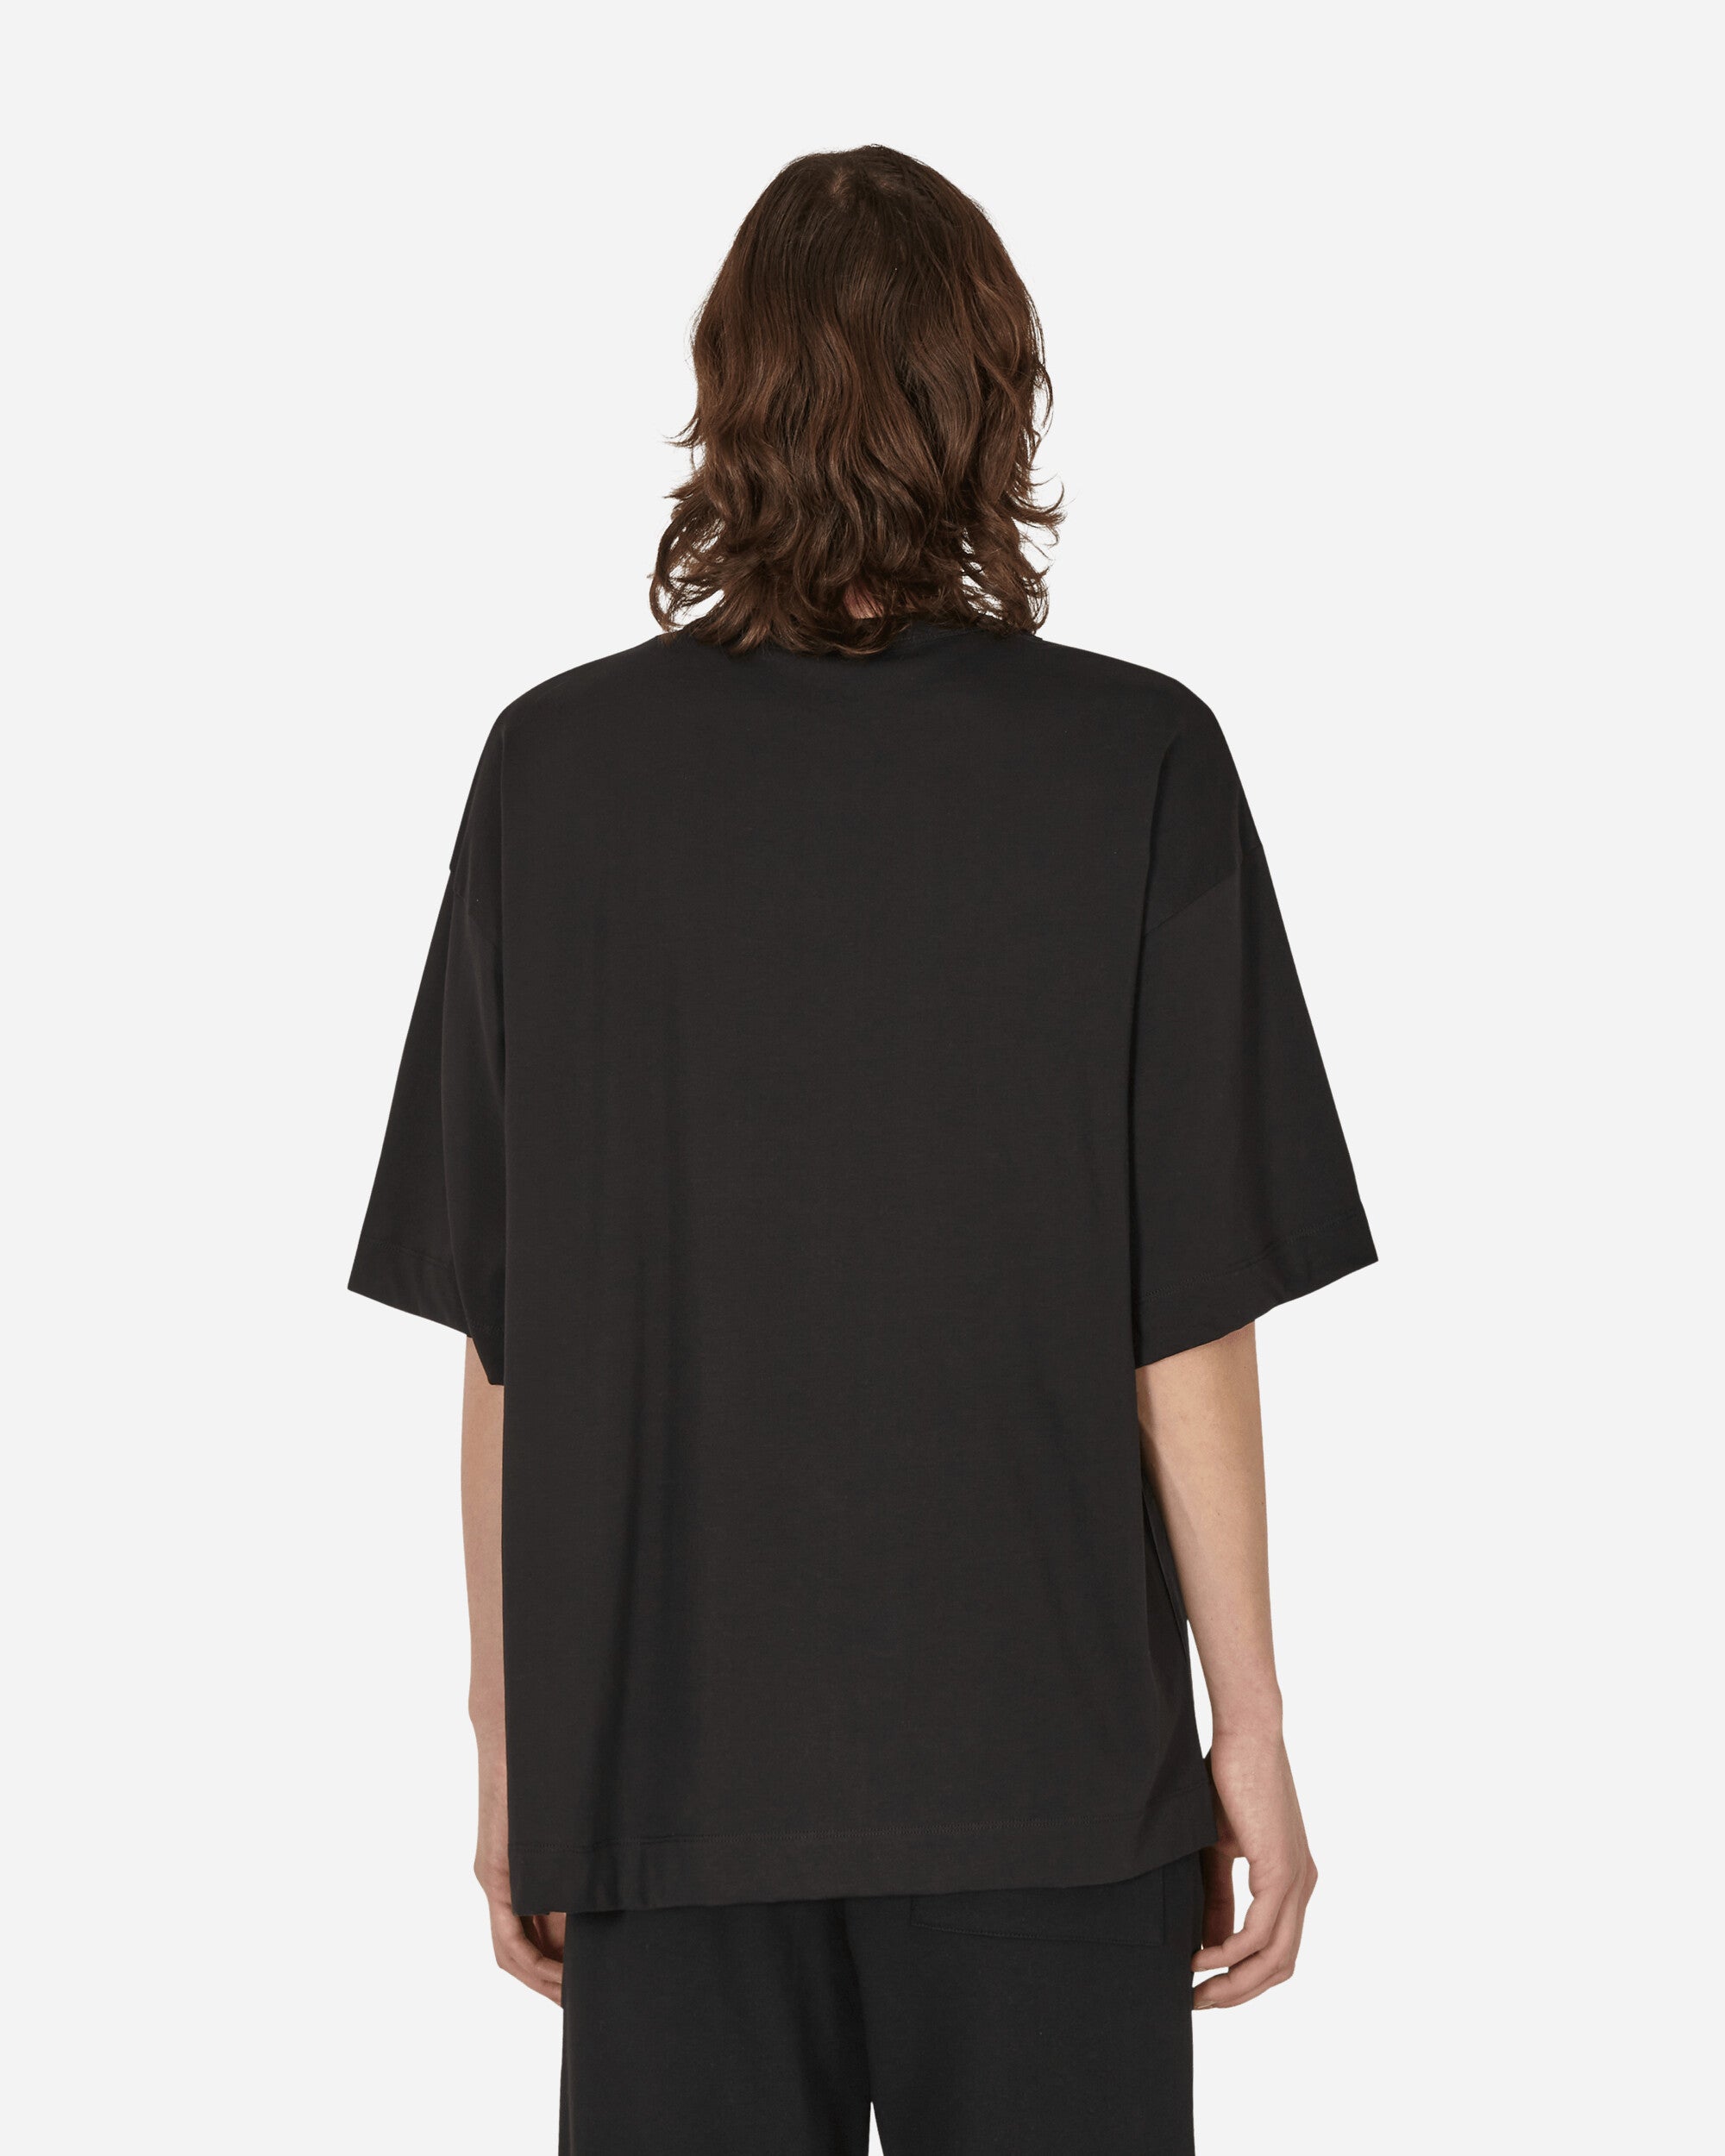 Dries Van Noten Hein T-Shirt Black T-Shirts Shortsleeve 231-021135-6600 900